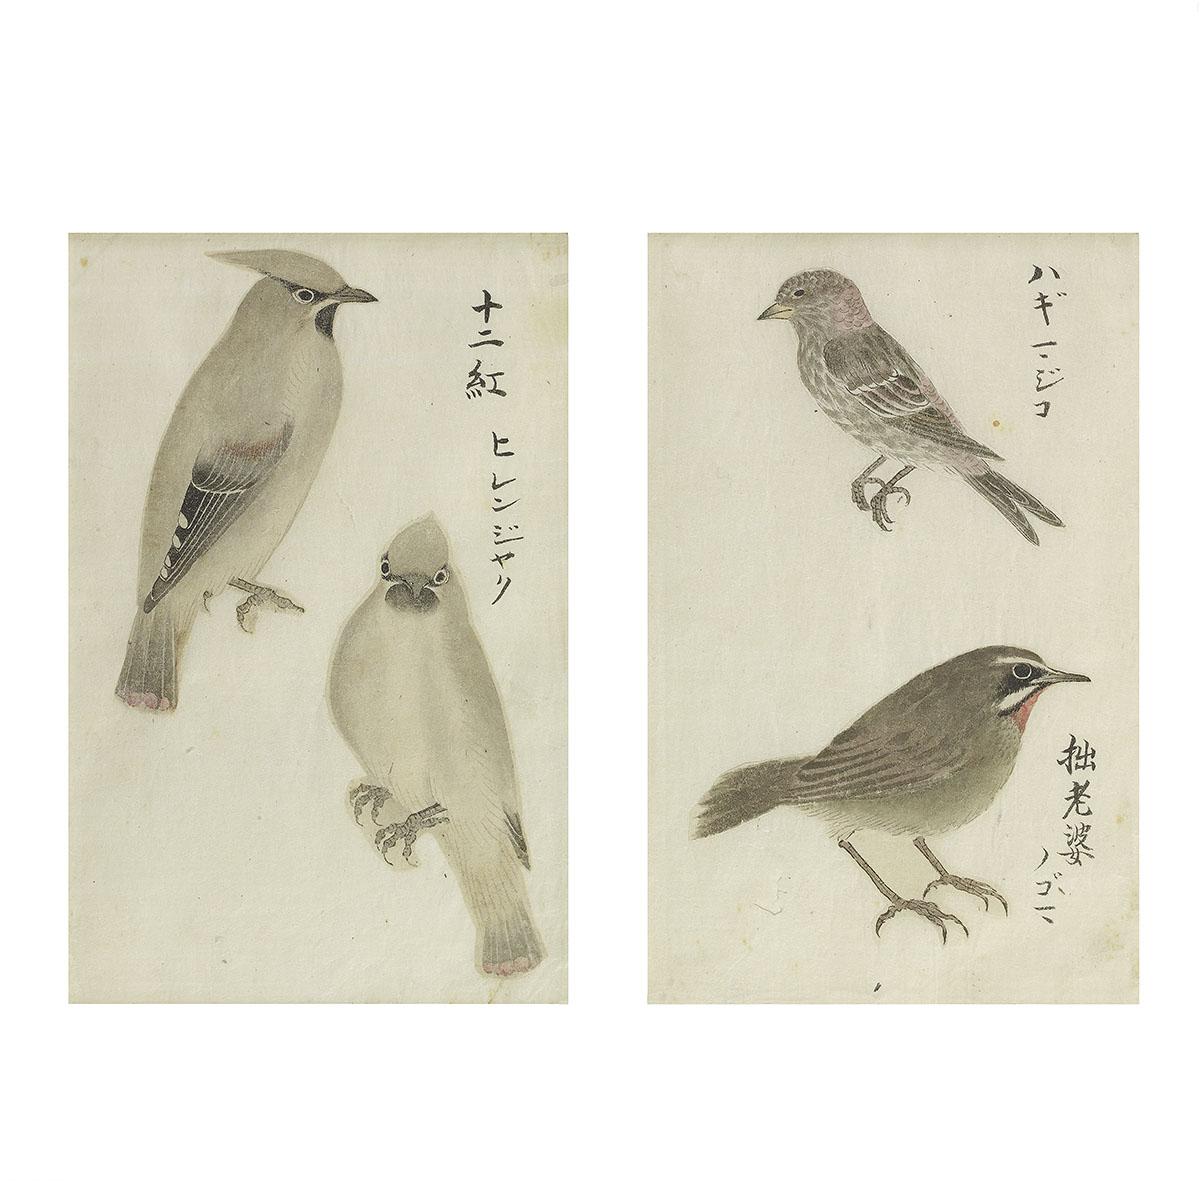 Watercolour studies of birds